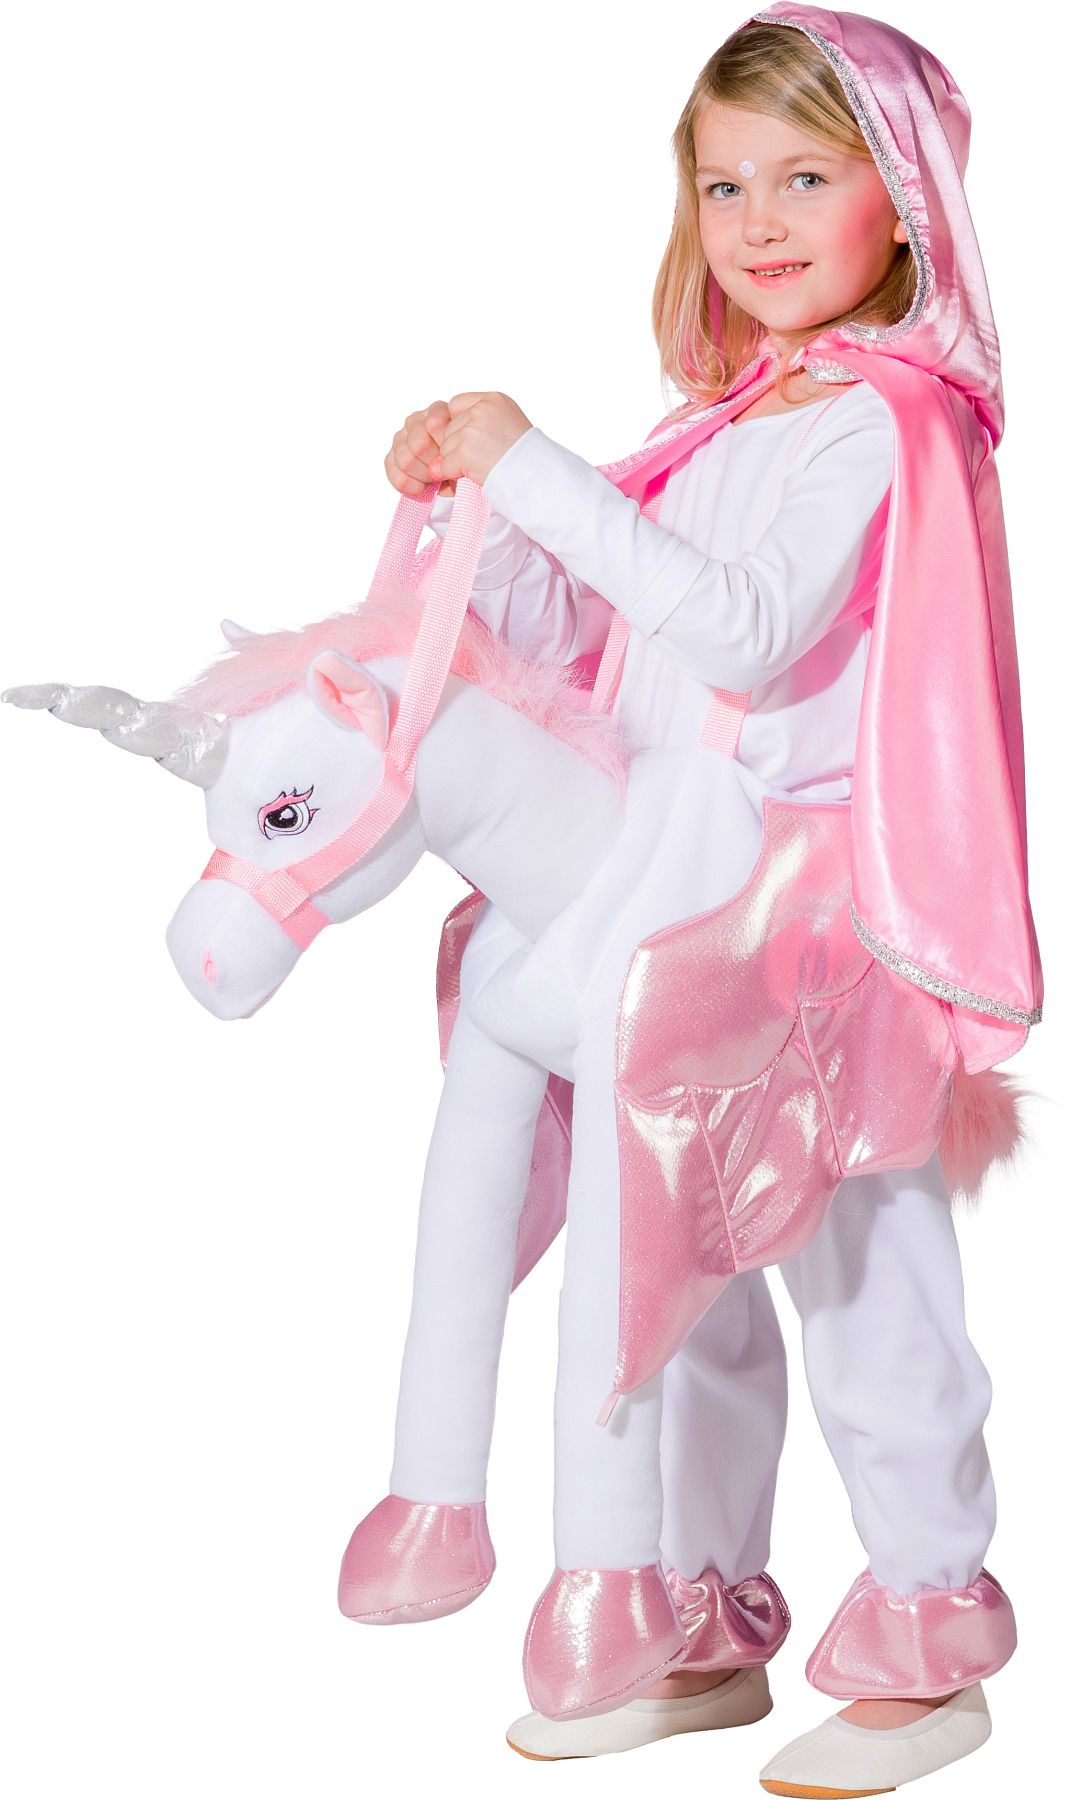 Unicorn ride on costume